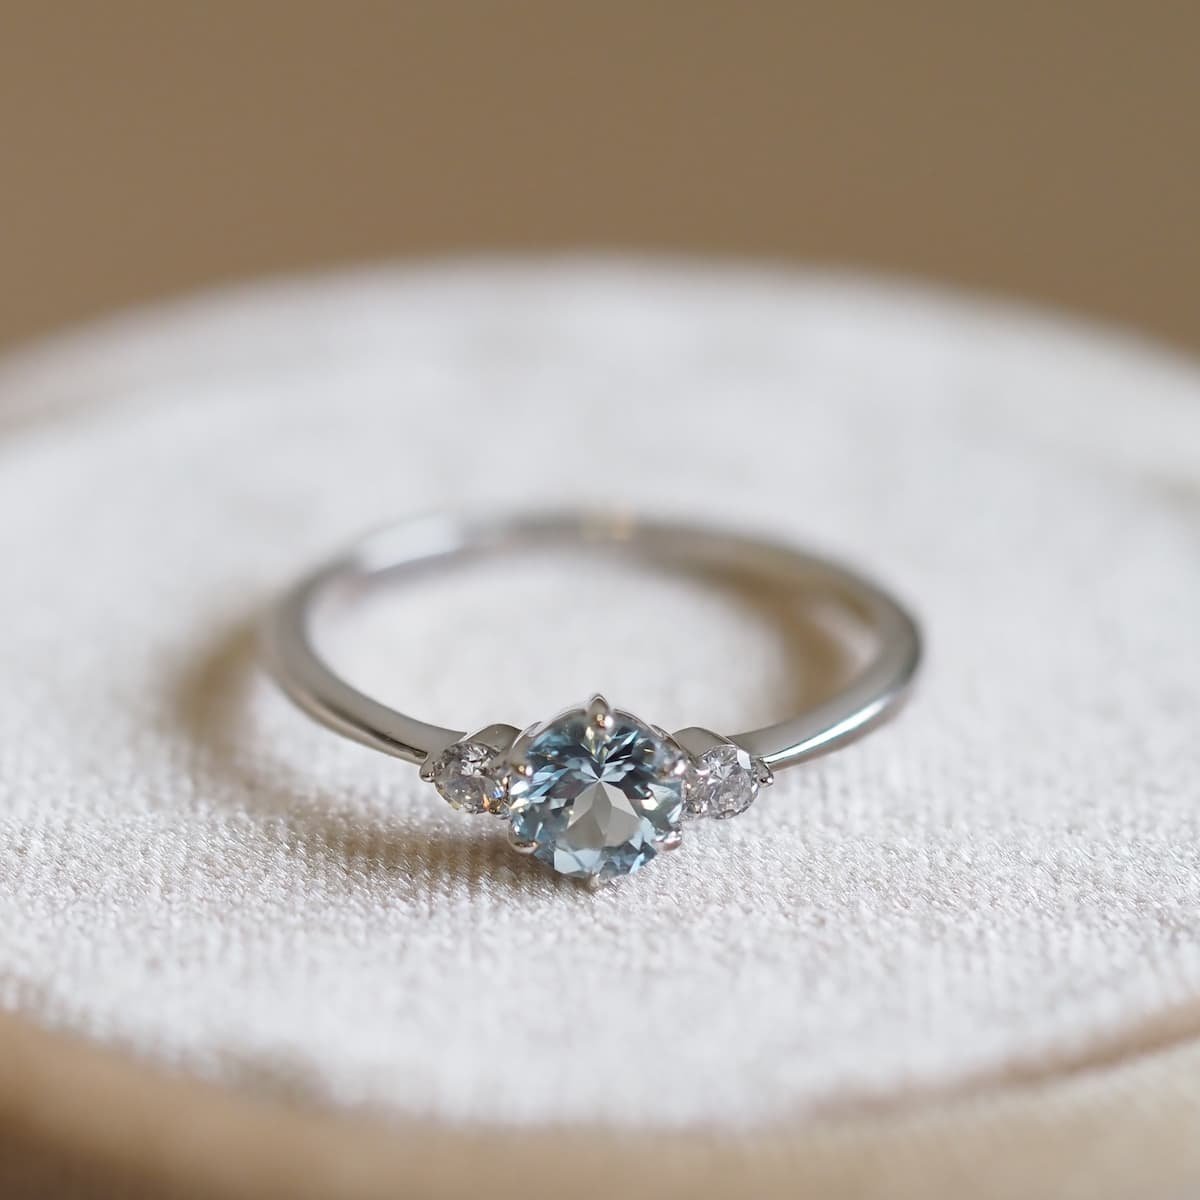 Natalie Aquamarine Ring - Engagement Ring